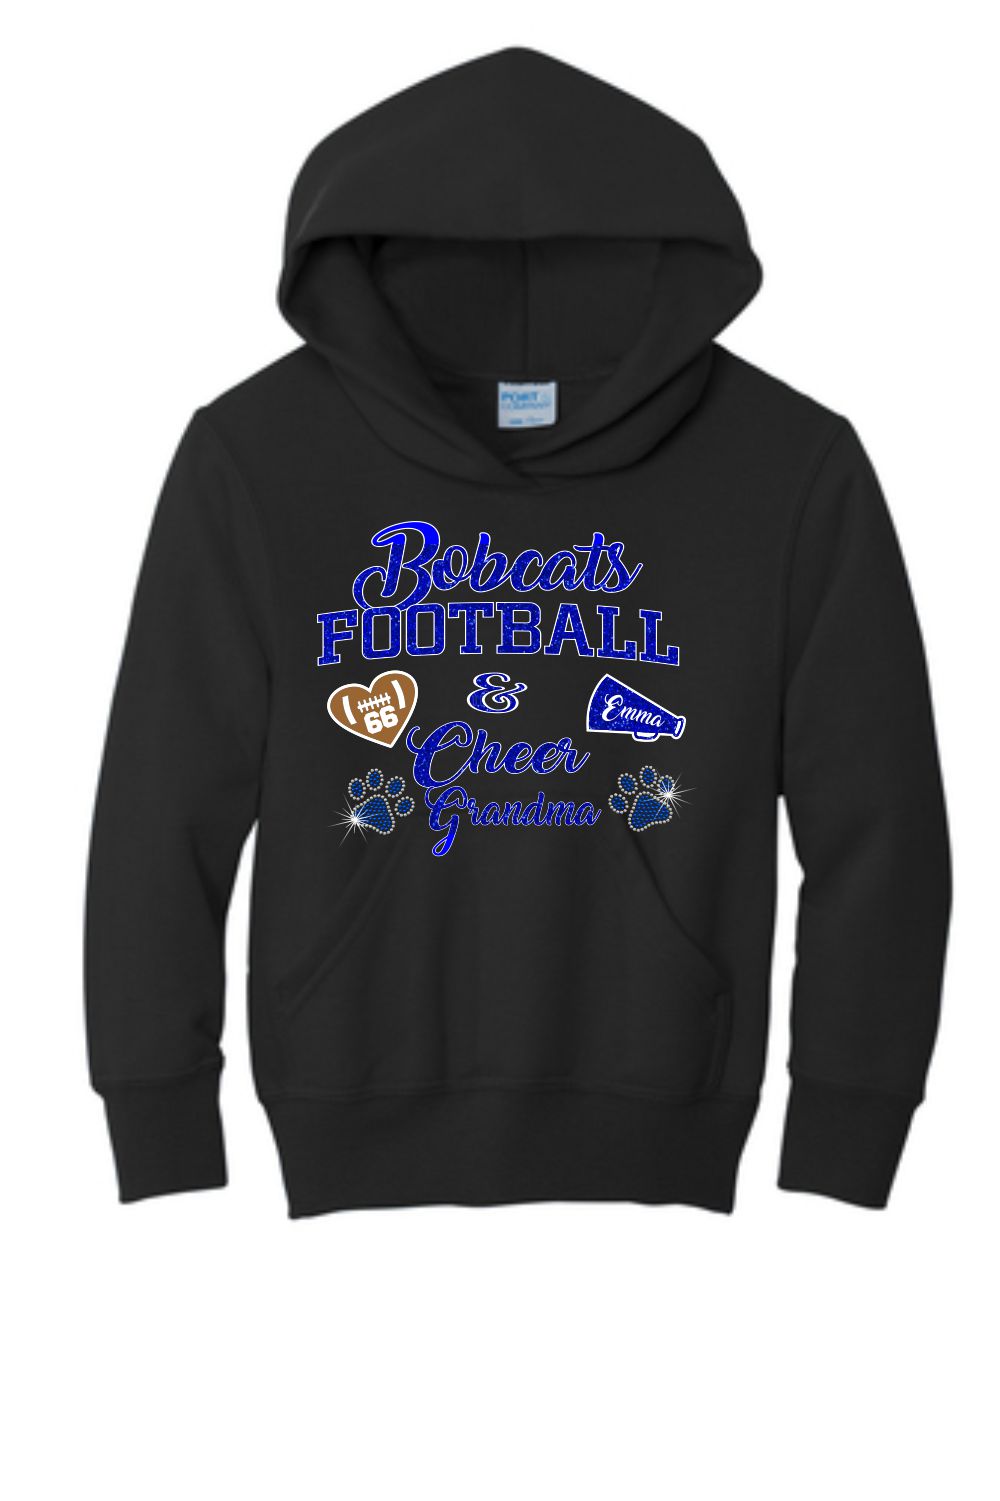 Bobcat Football and Cheer Grandma Hooded Sweatshirt